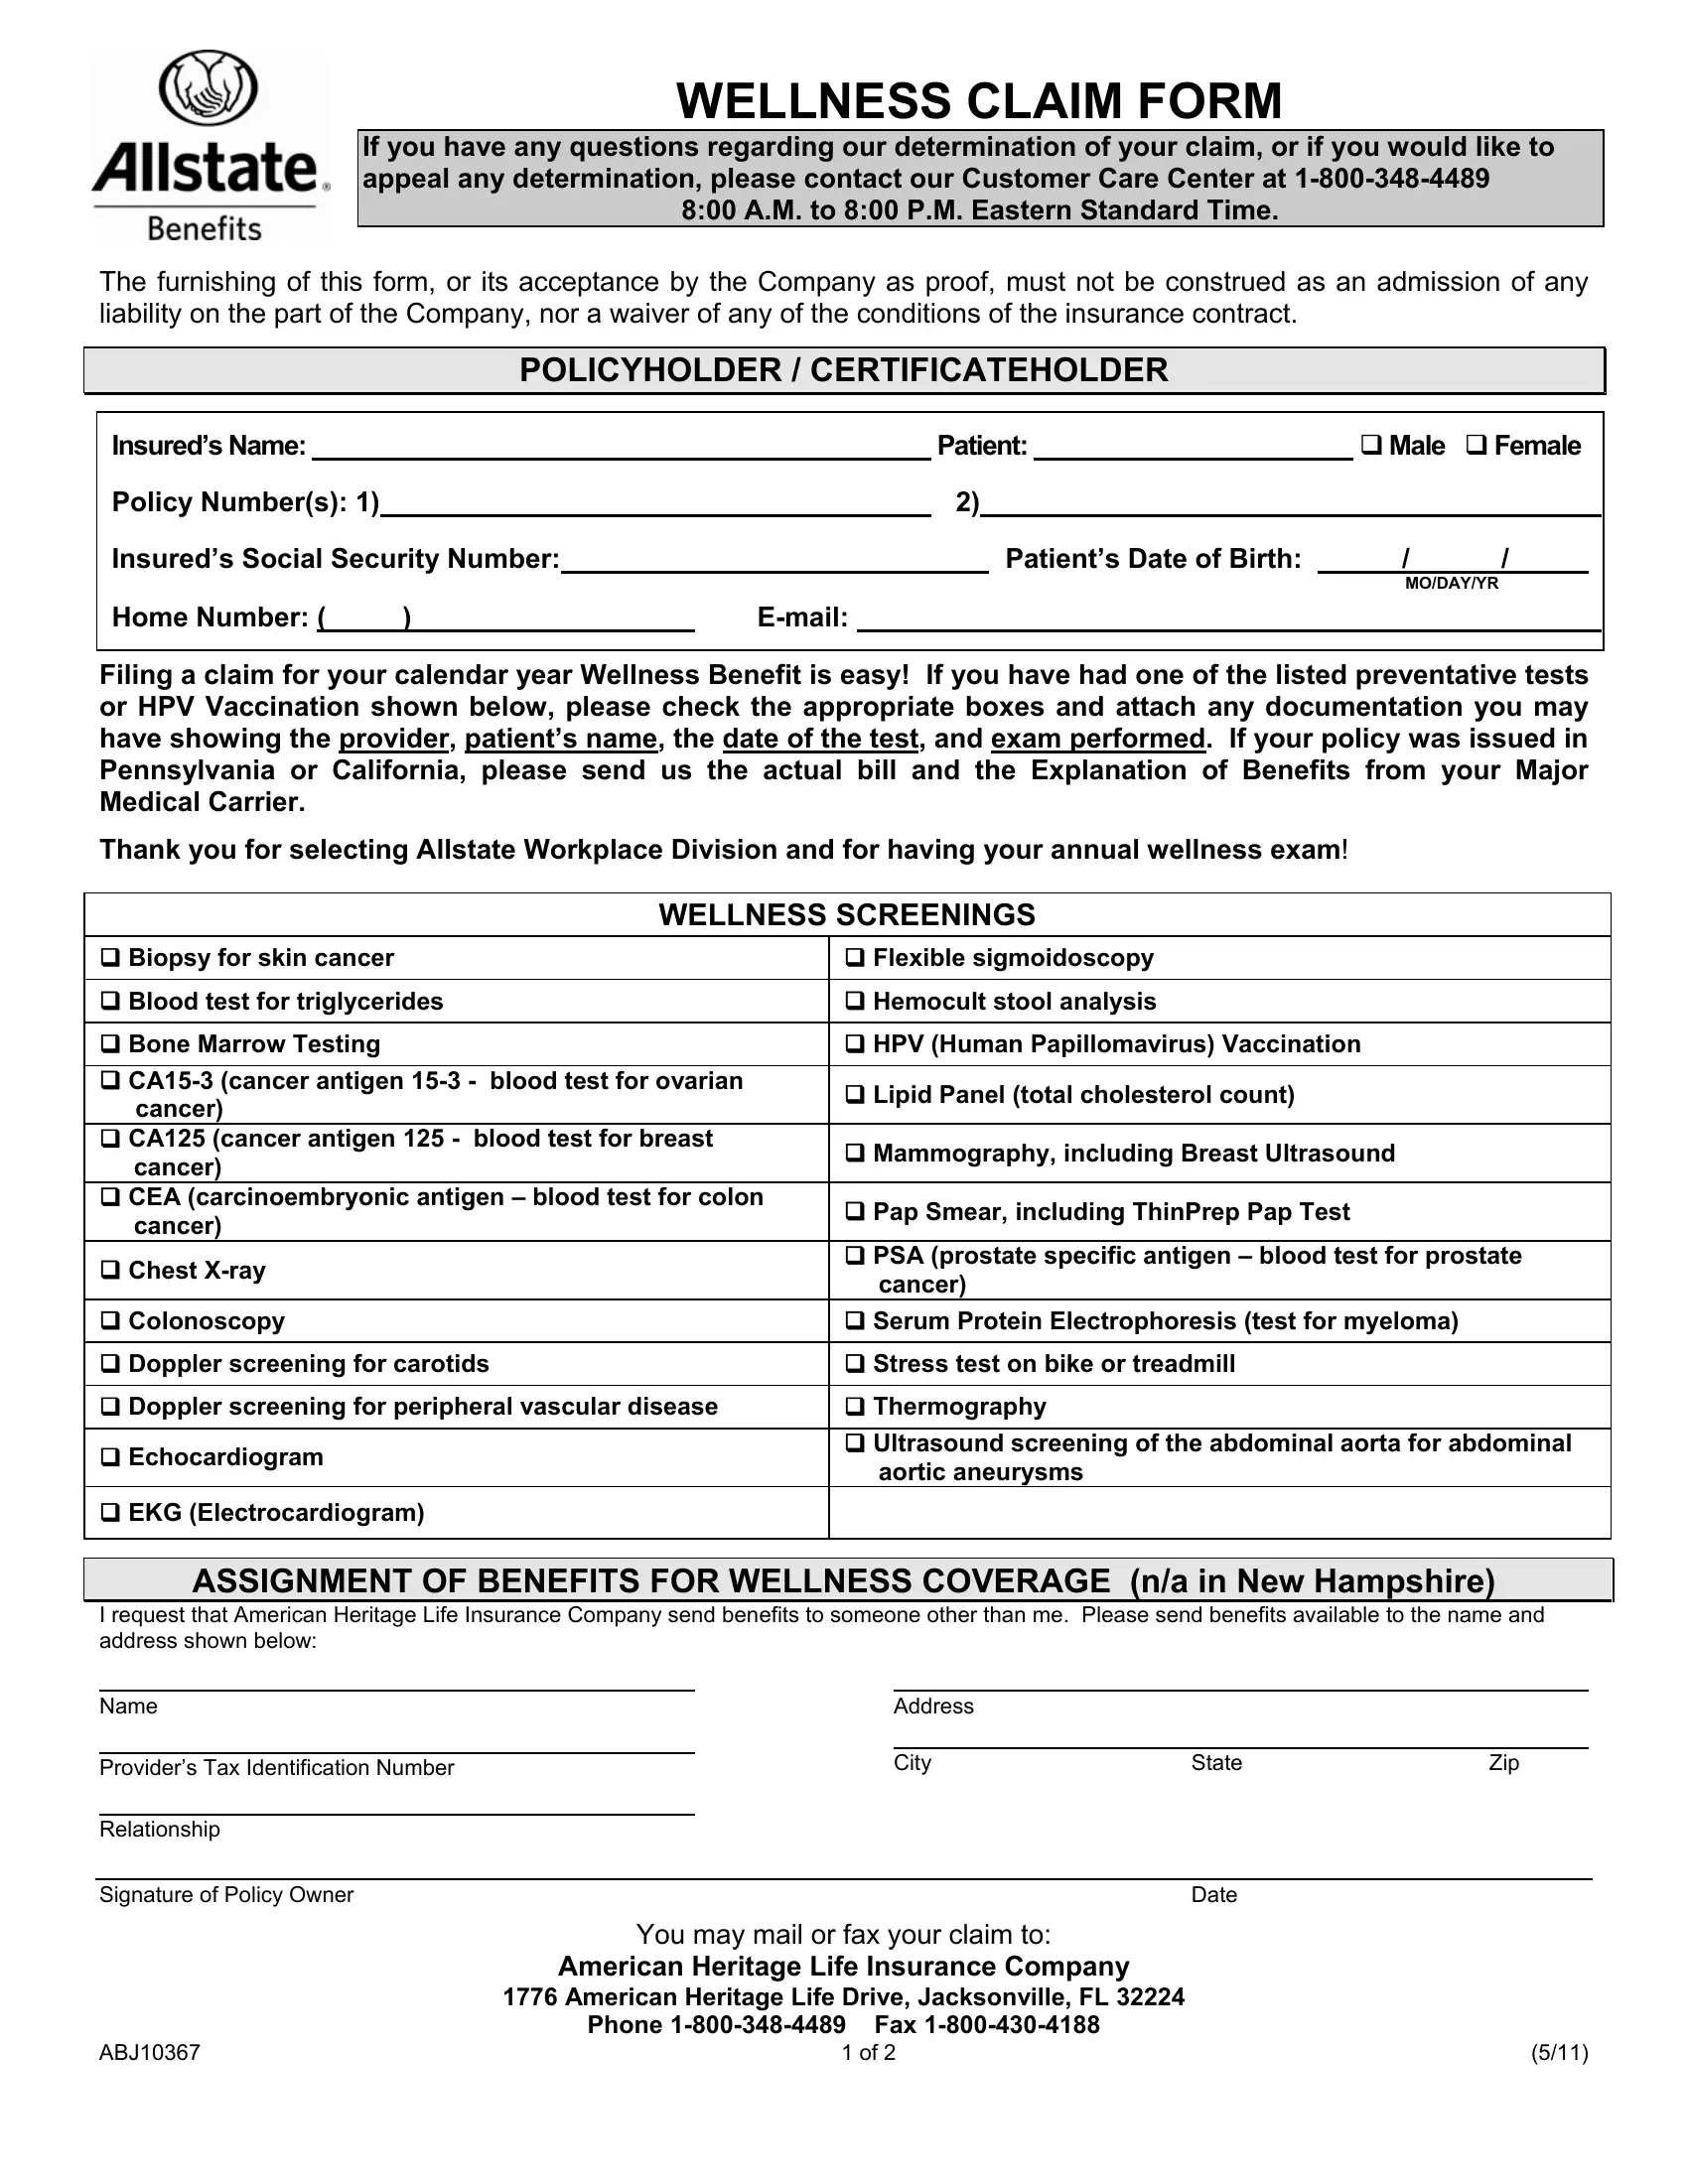 allstate-wellness-claim-application-pdf-form-formspal